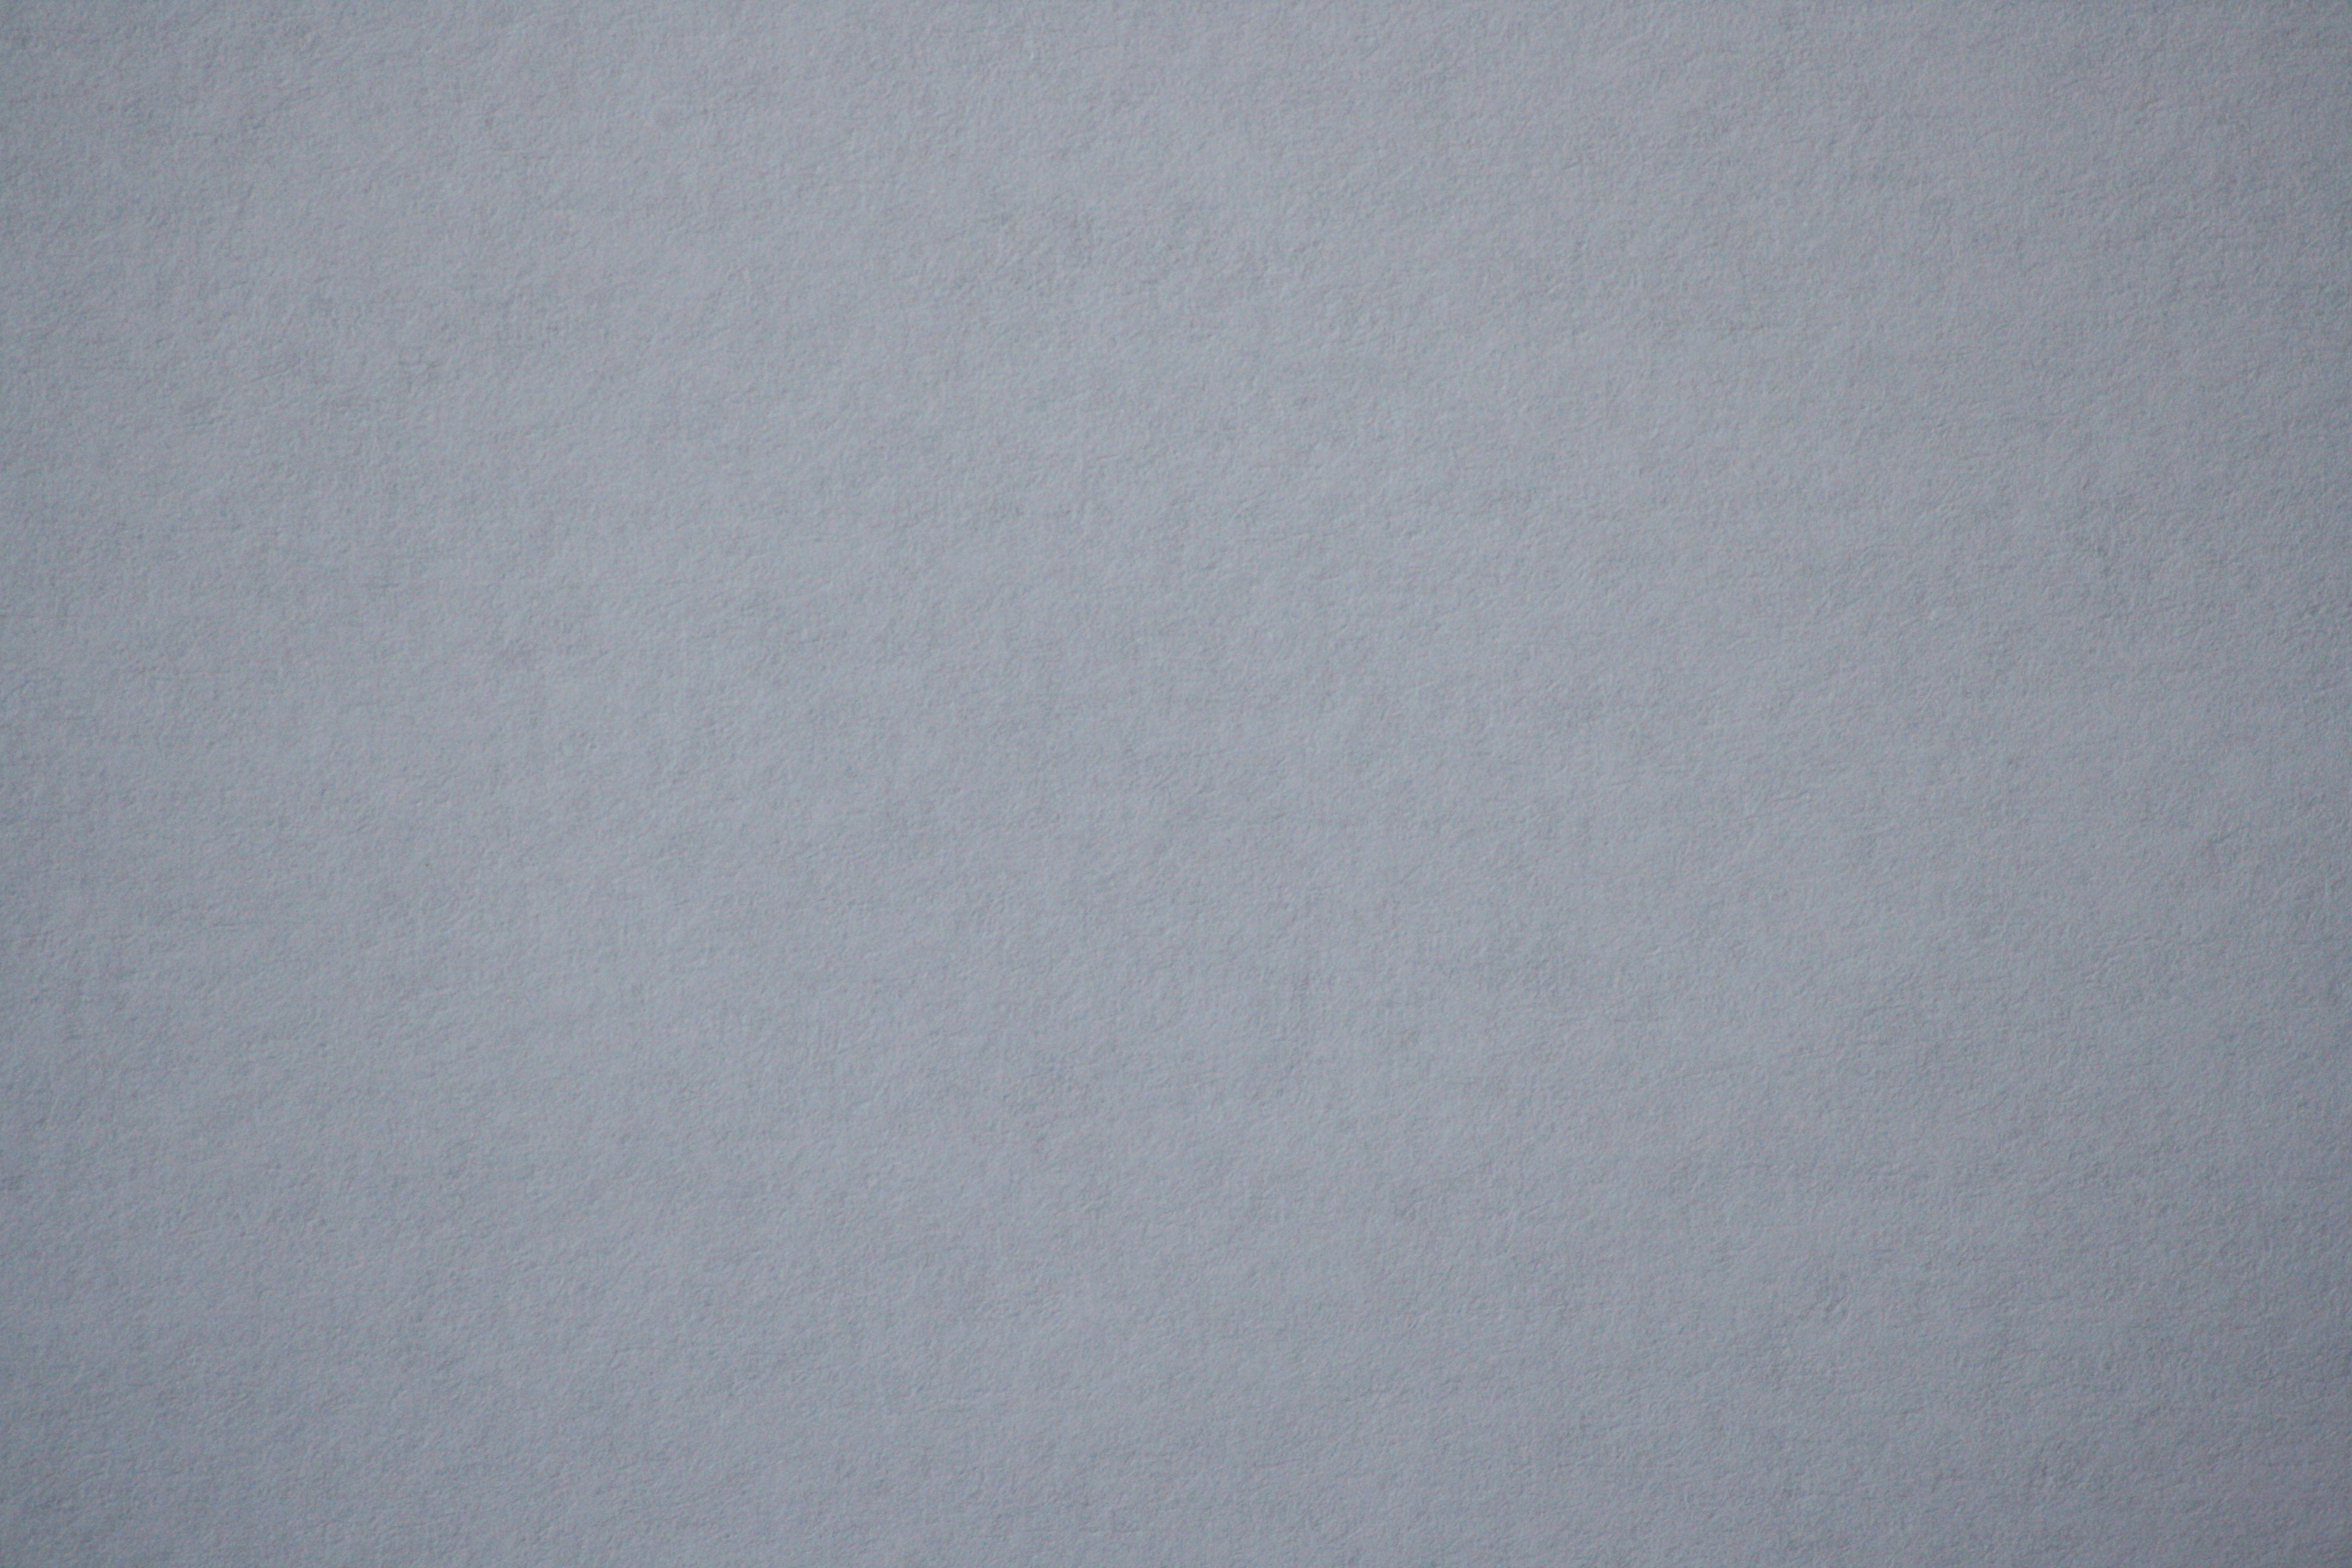 Gray Paper Texture Picture | Free Photograph | Photos Public Domain